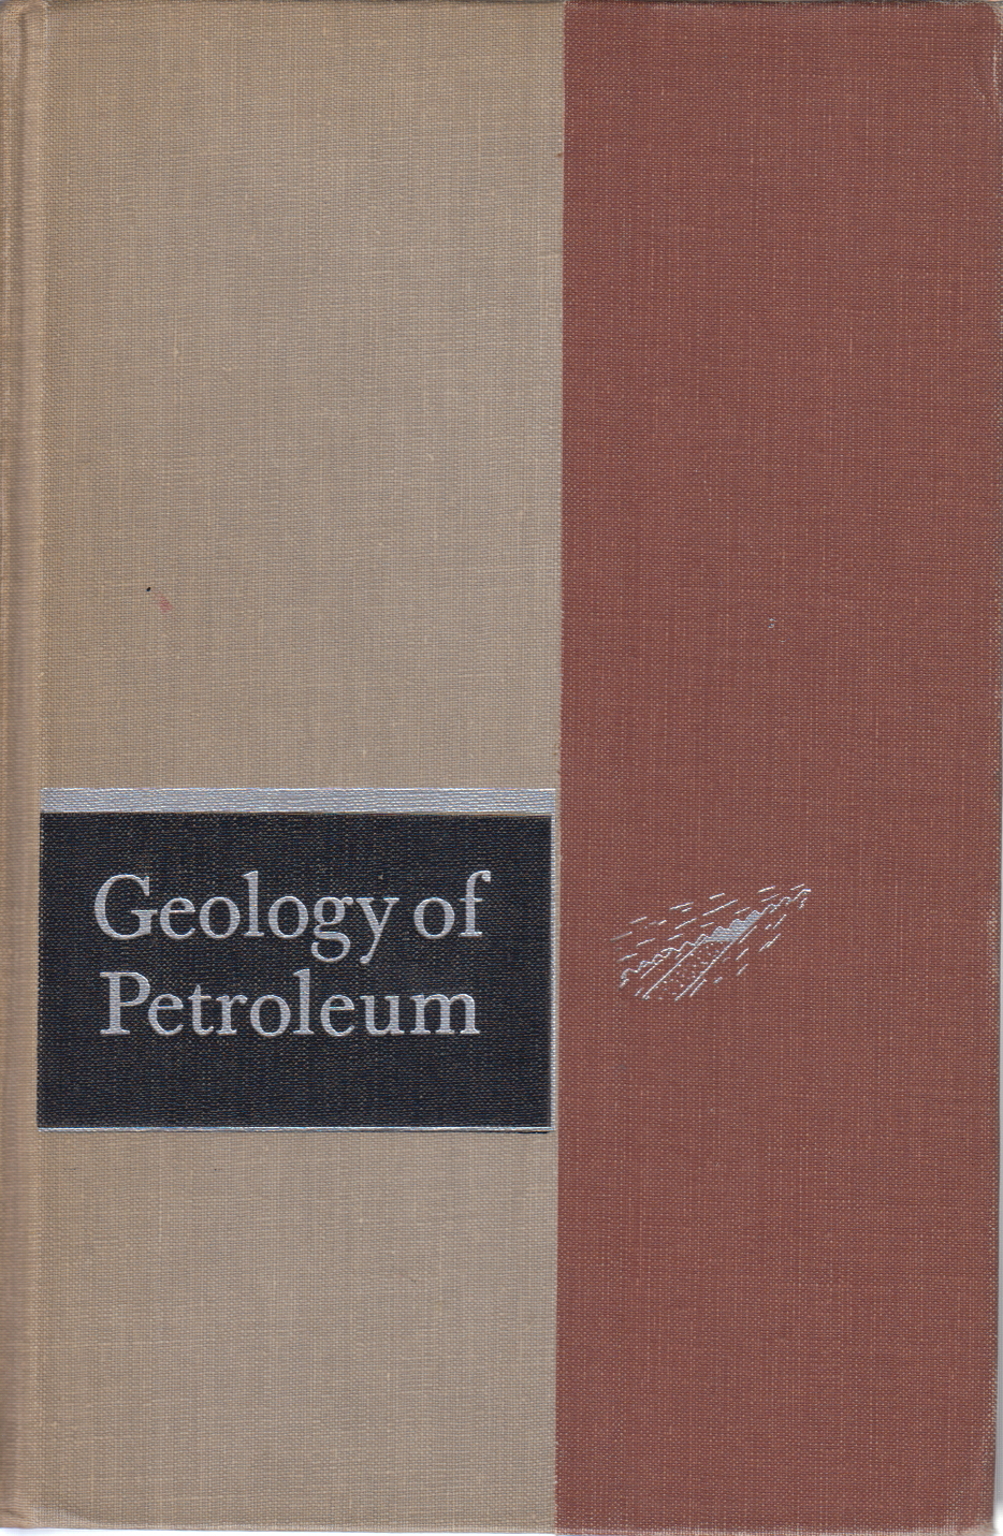 Geology of petroleum, A. I. Levorsen